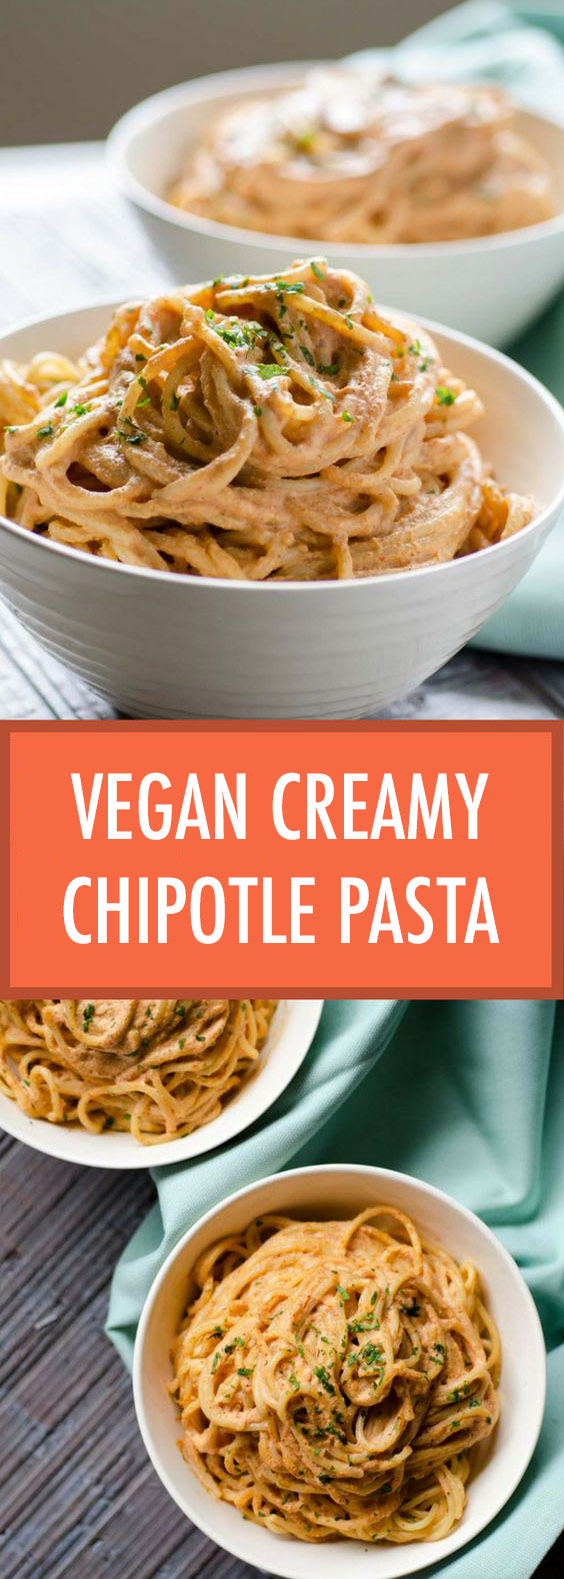 Vegan Creamy Chipotle Pasta